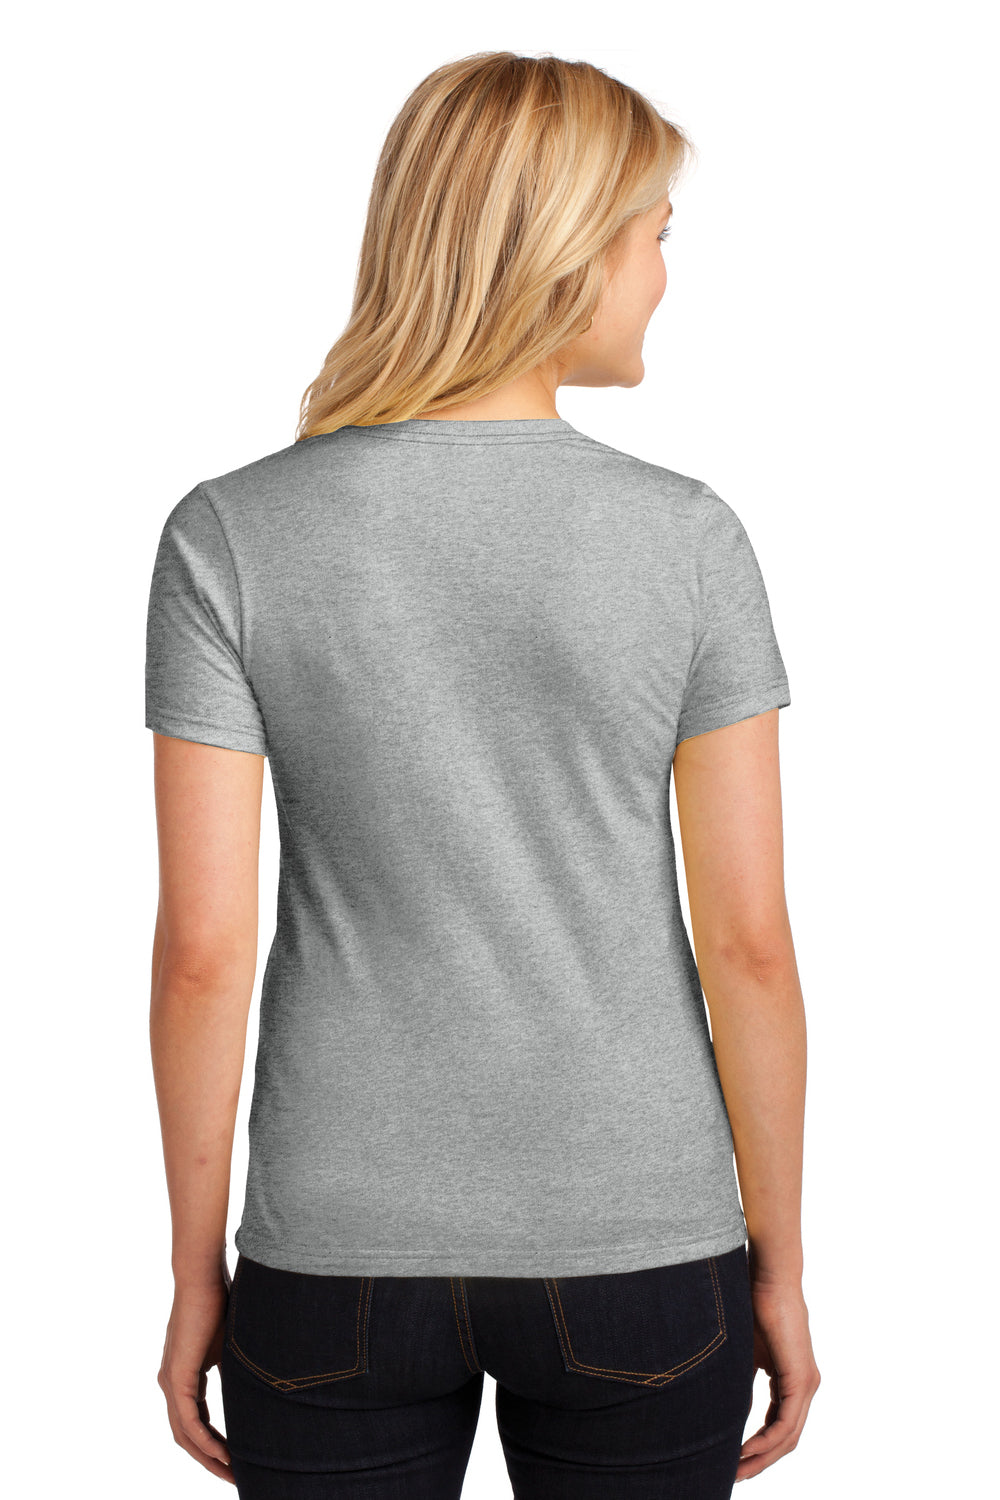 Anvil 880 Womens Short Sleeve Crewneck T-Shirt Heather Grey Back